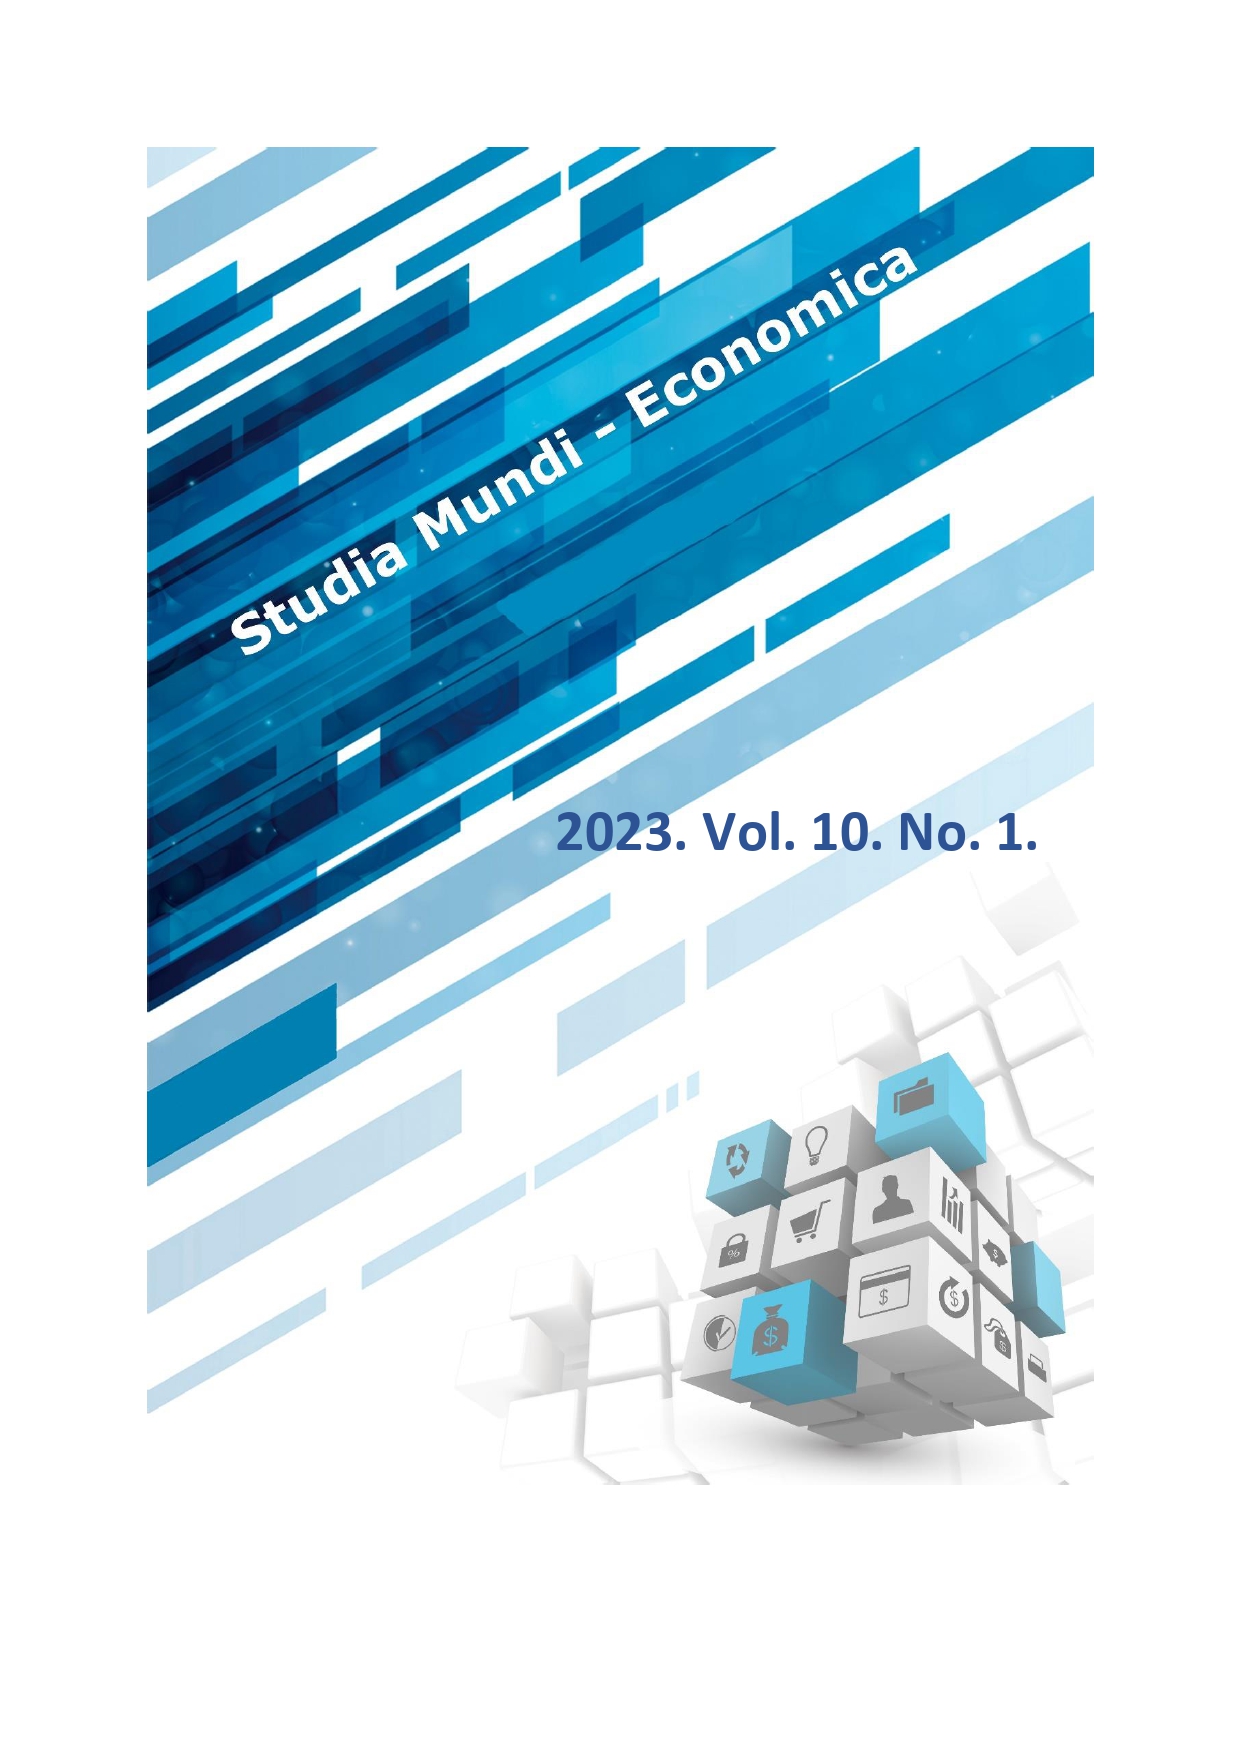 					View Évf. 10 szám 1 (2023): Studia Mundi – Economica
				